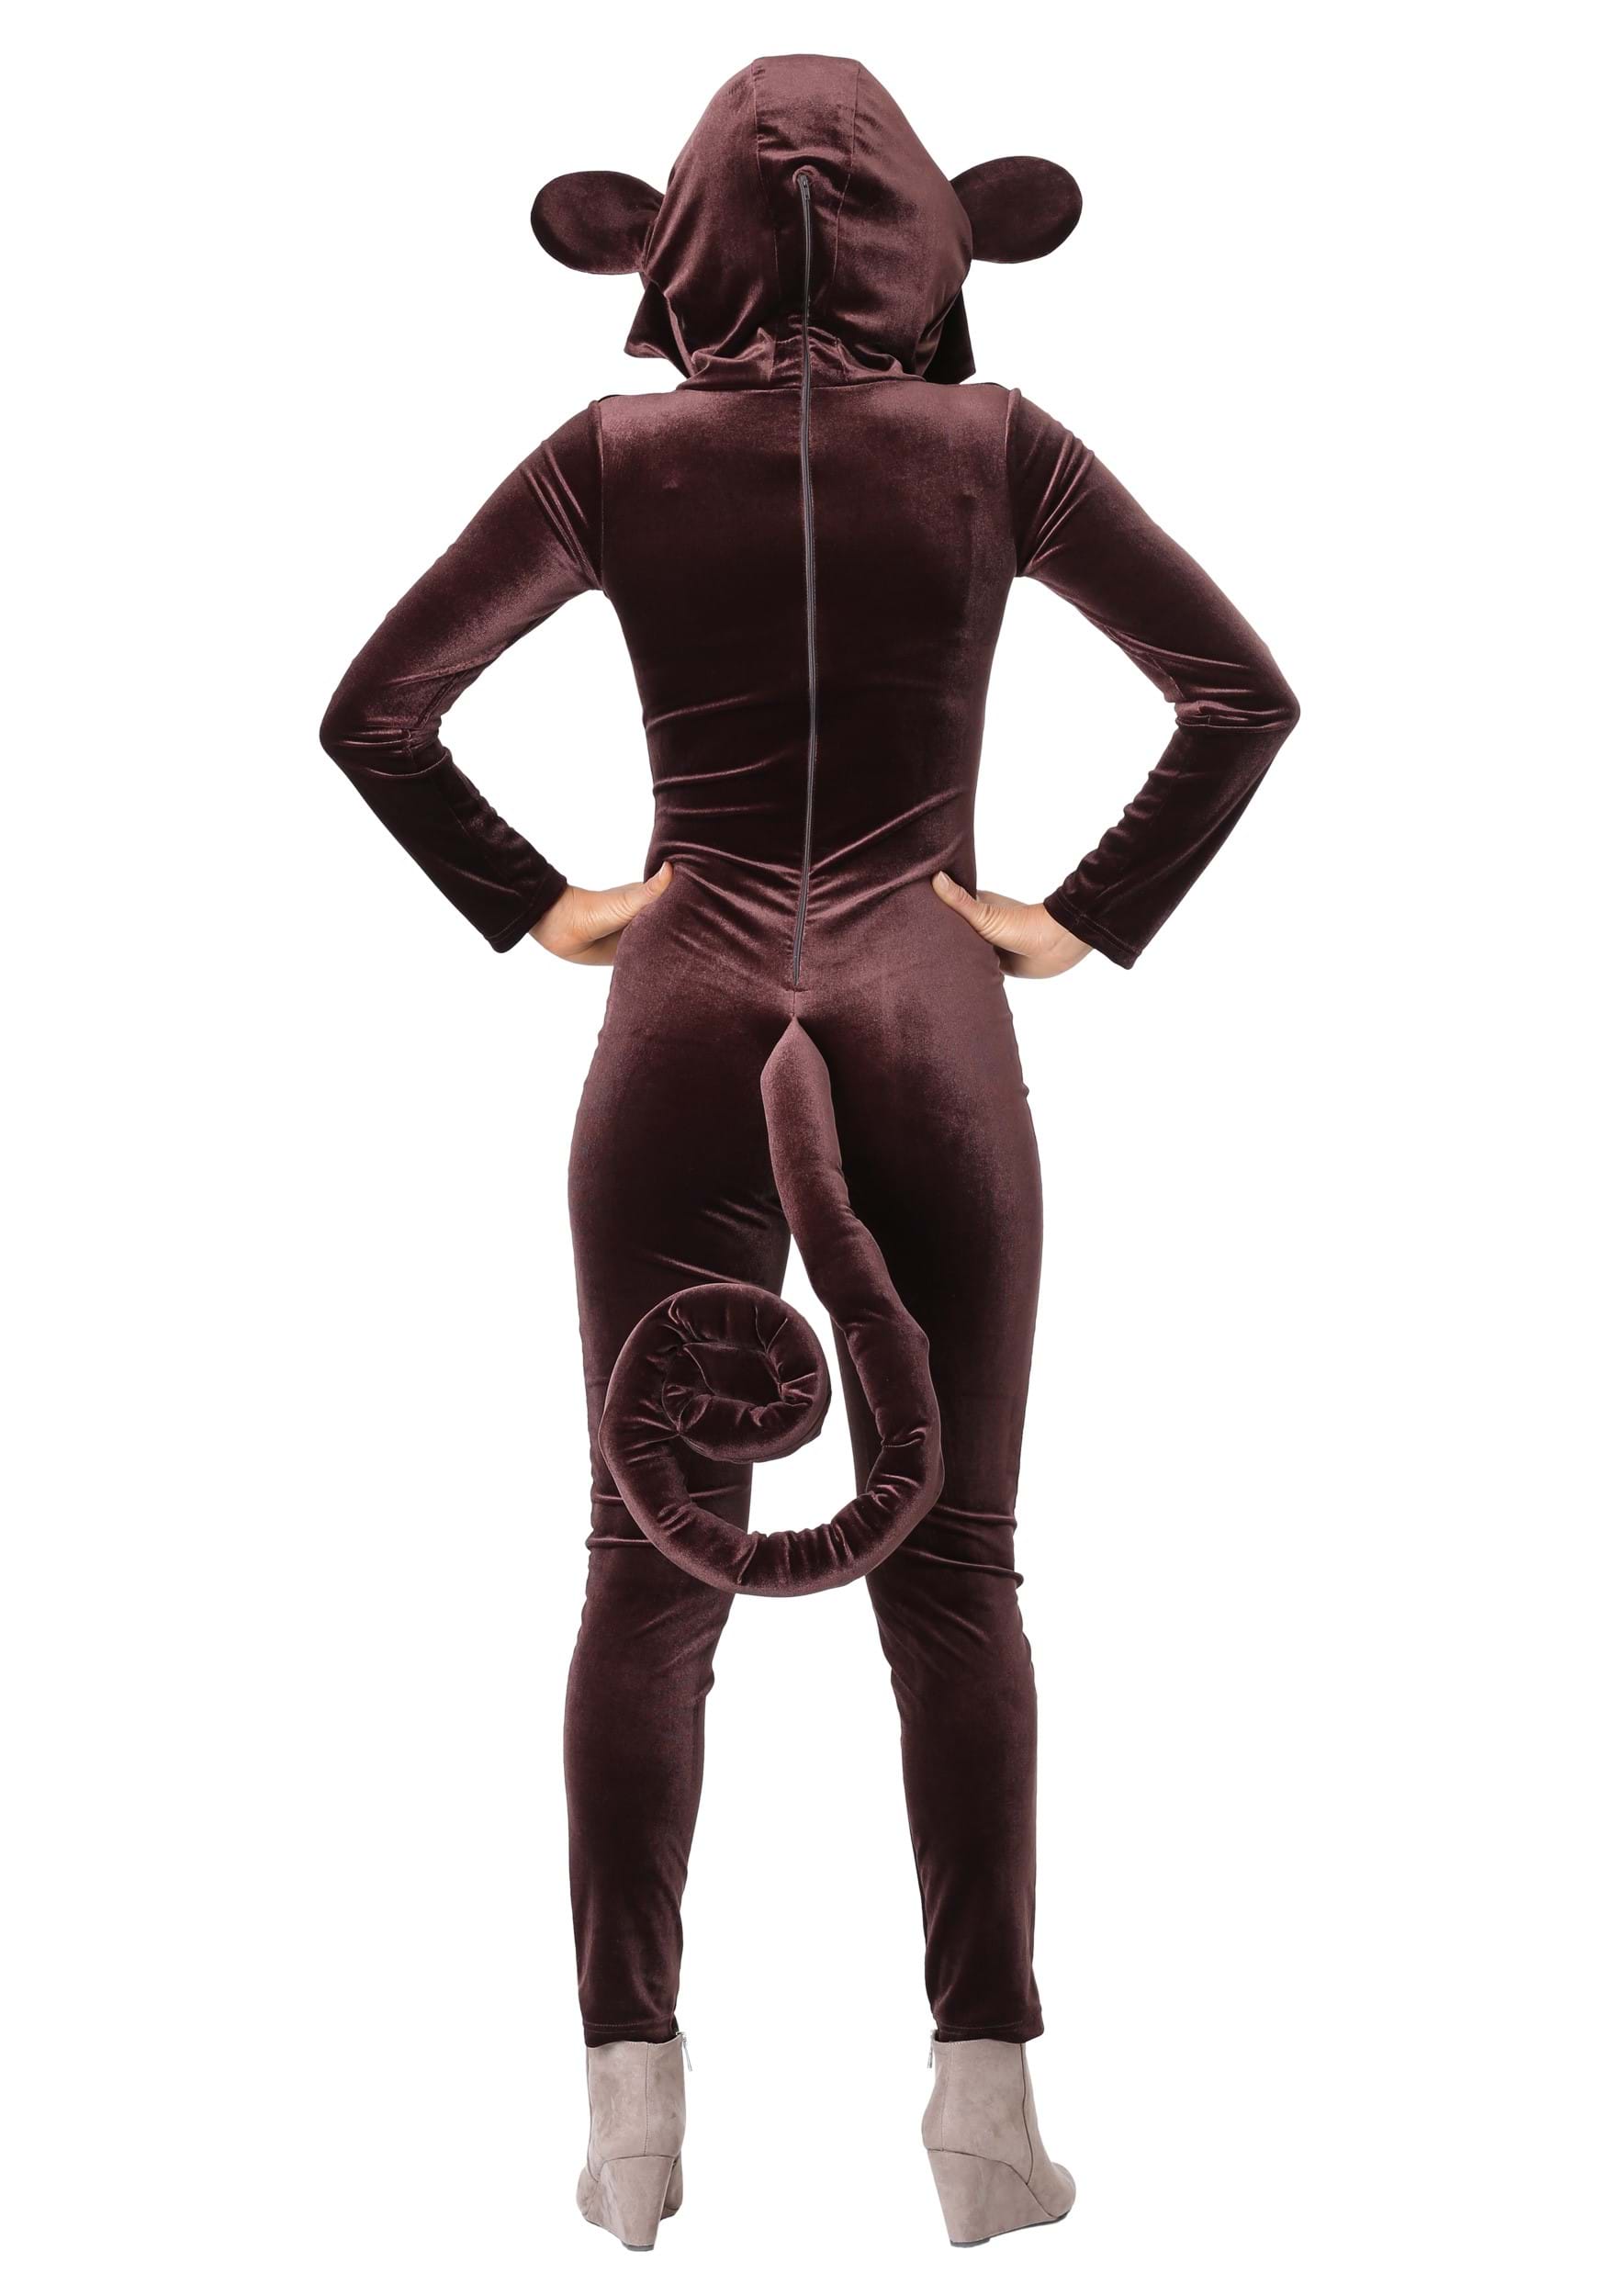 Jumpsuit Monkey Around Costume For Women , Animal Costume